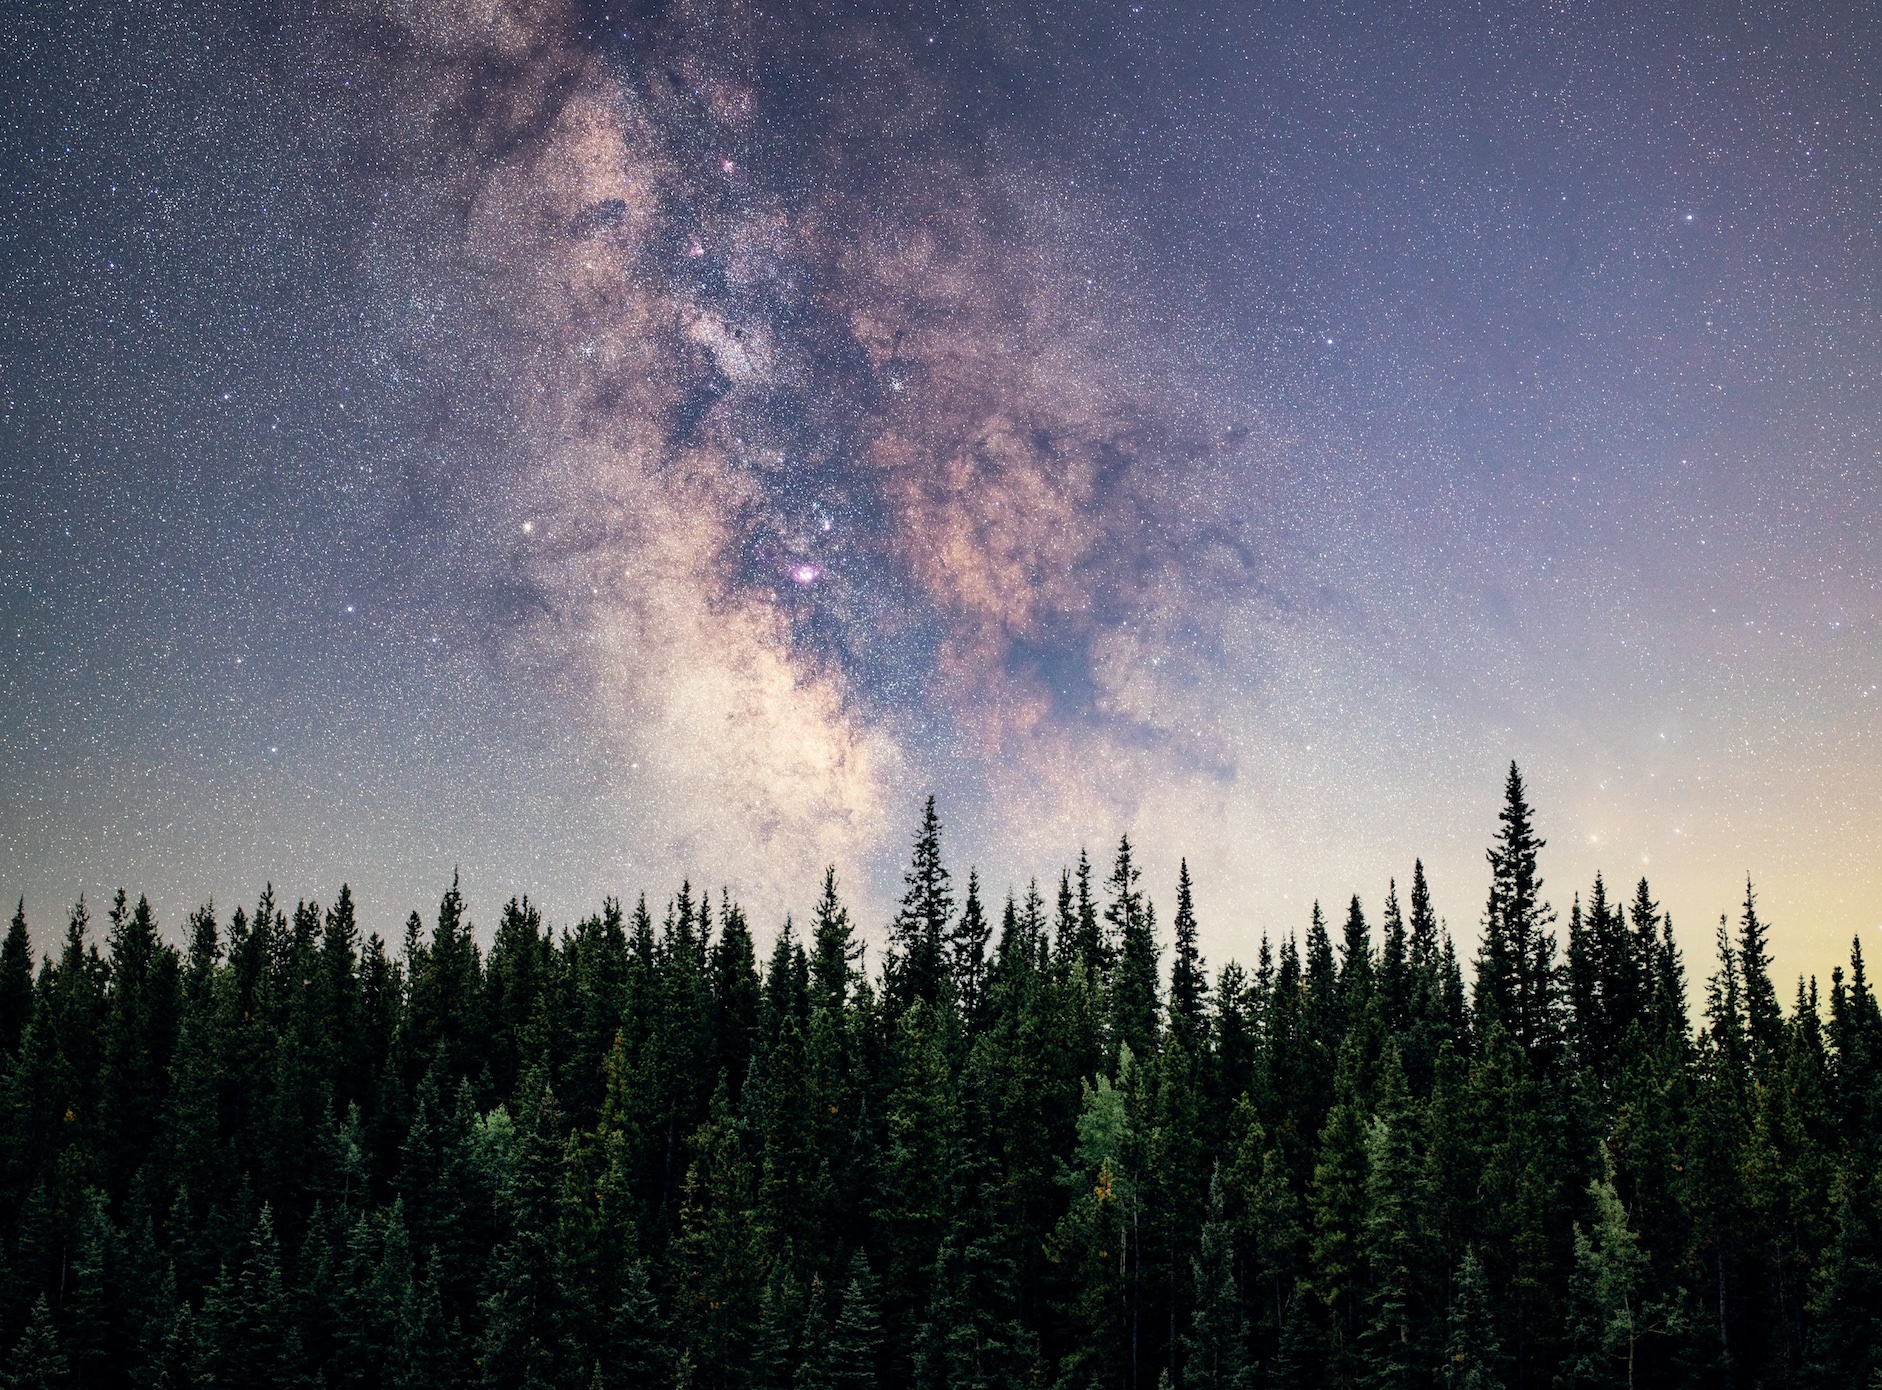 Stary night sky over pine forest in Minnesota; image by Vincent Ledvina, via Unsplash.com.